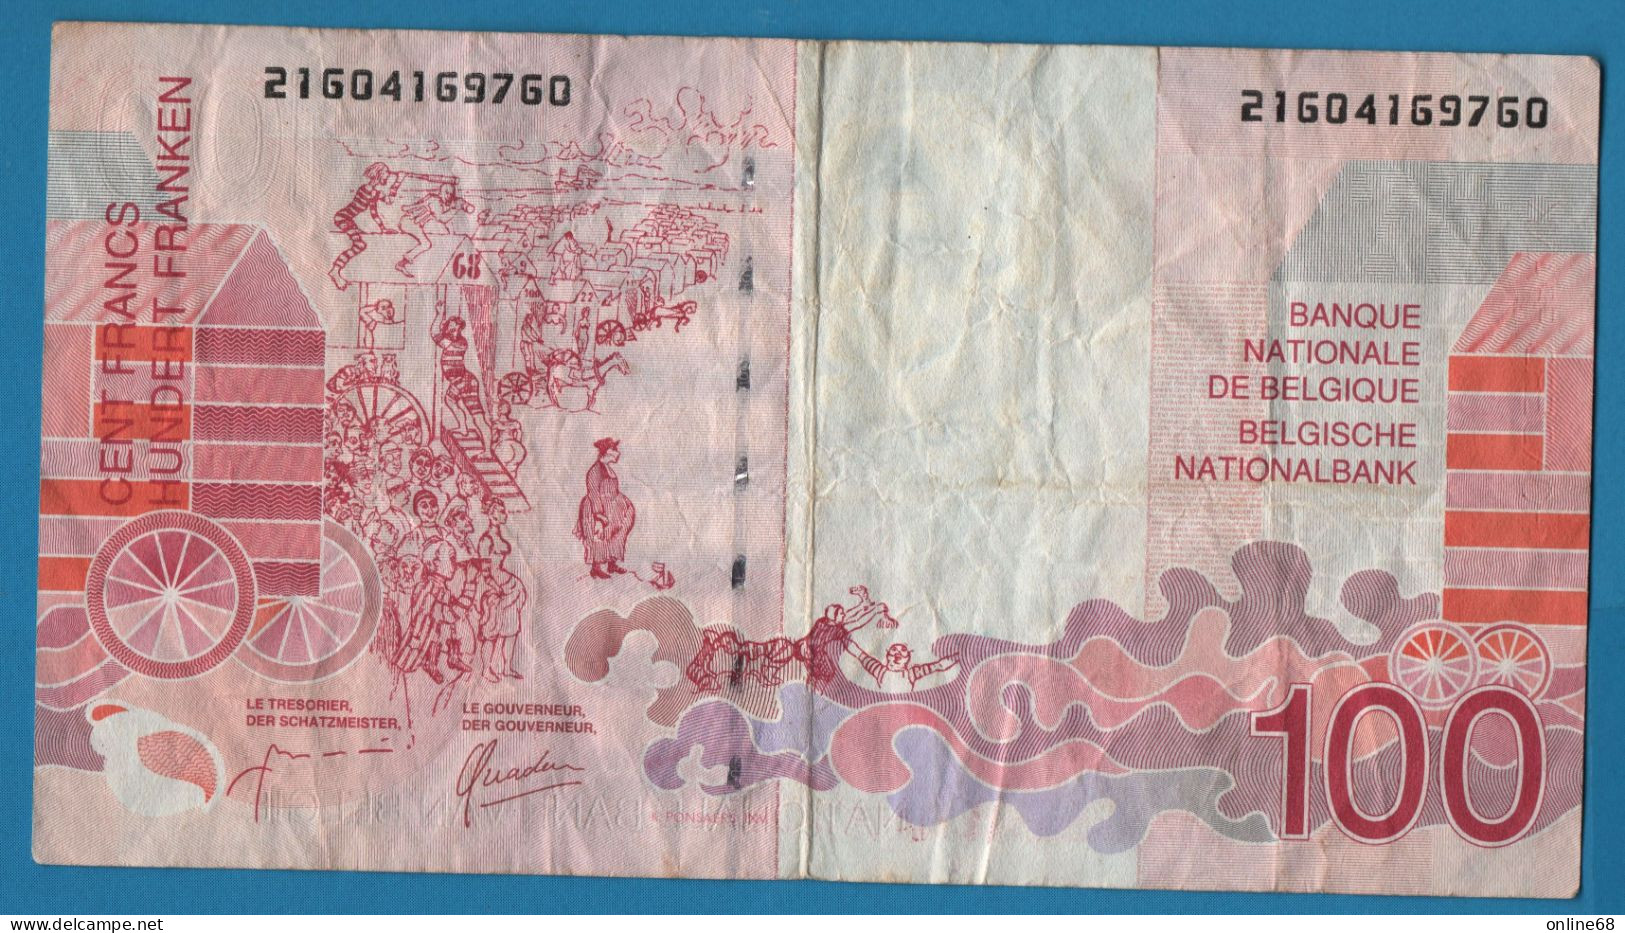 BELGIQUE 100 FRANCS ND (1995-2001) # 21604169760 P# 147 James Ensor Signatures: Masai & Quaden - 100 Francos